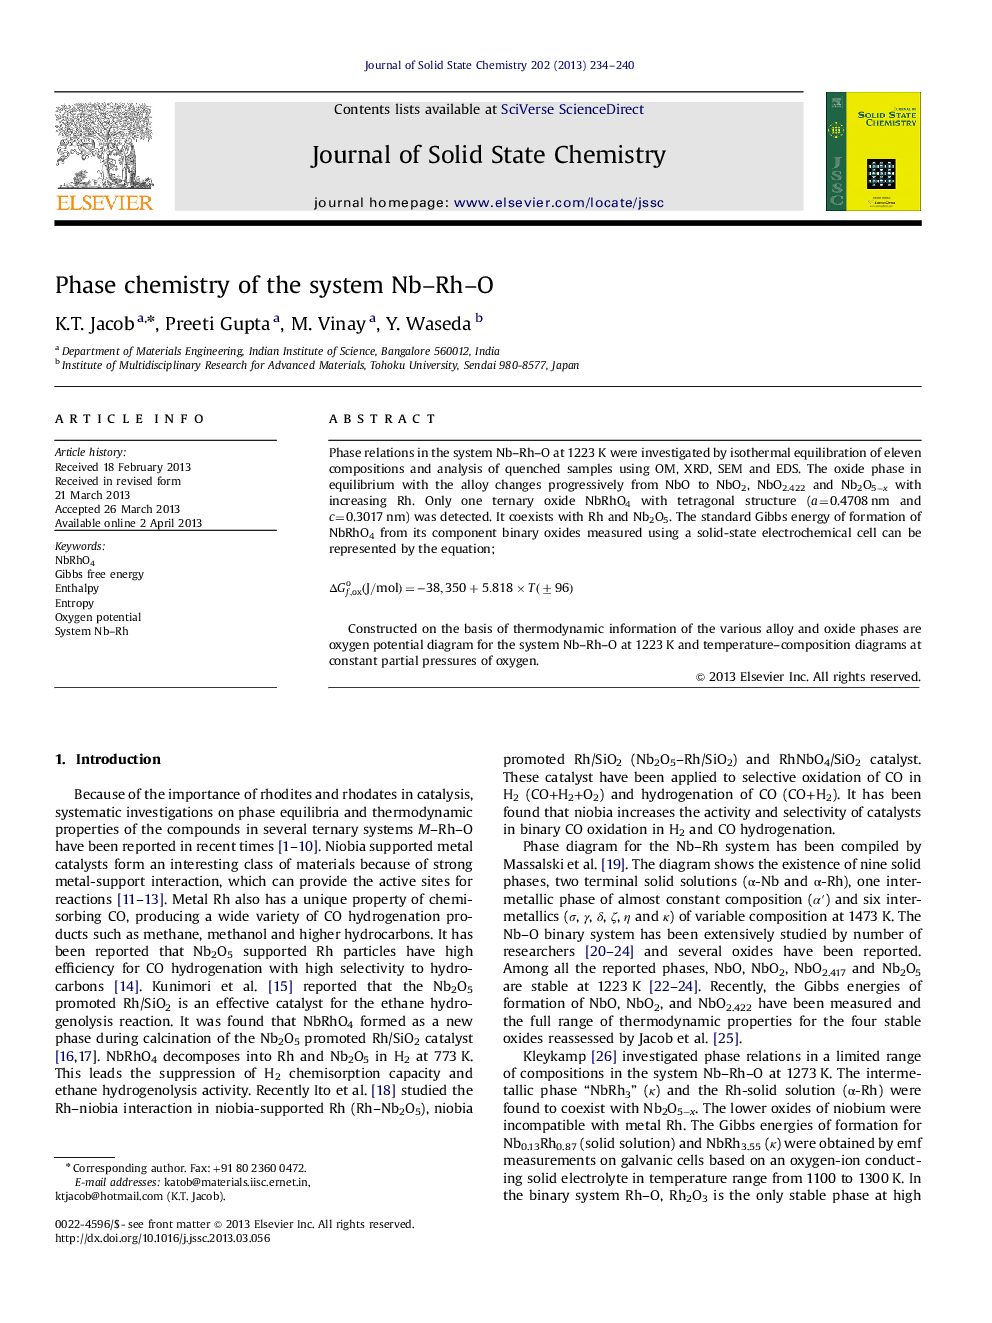 Phase chemistry of the system Nb–Rh–O